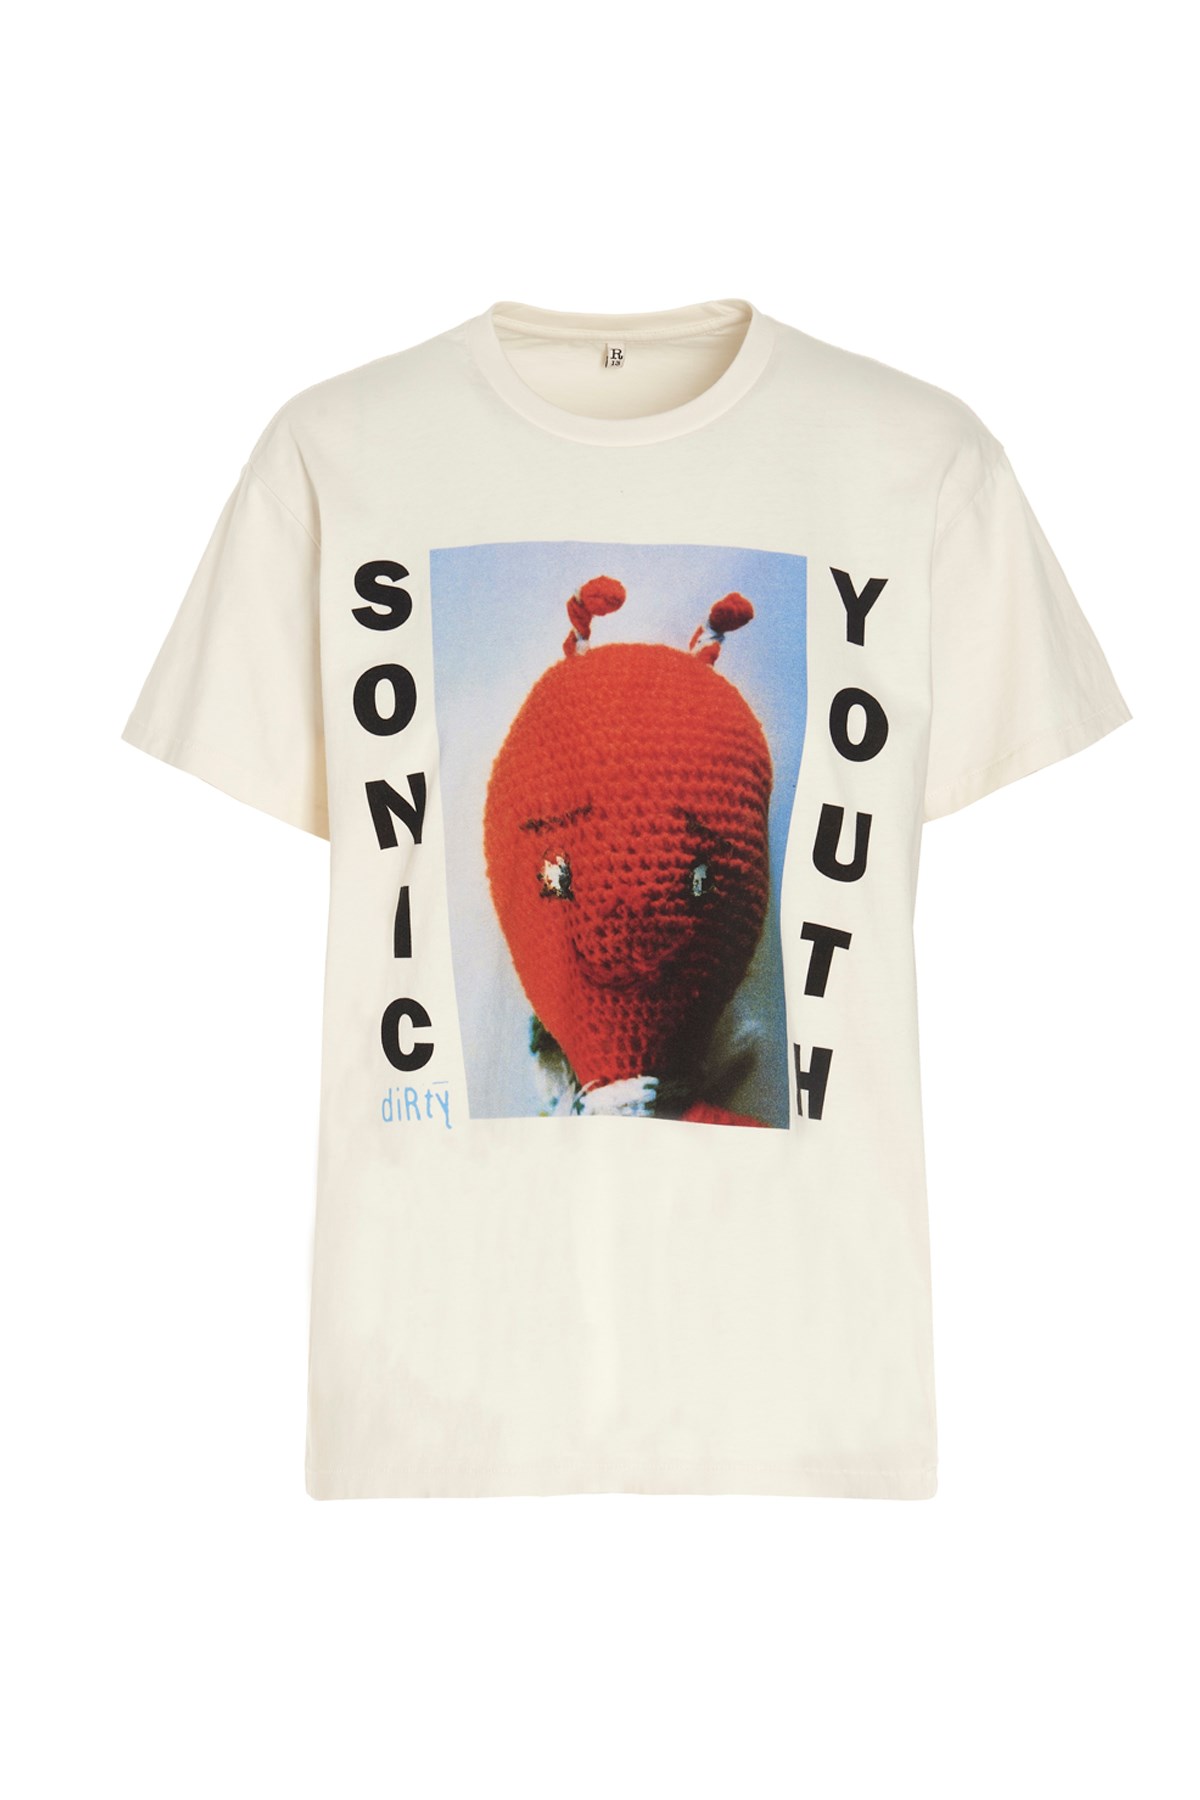 R13 'Sonic Youth’ T-Shirt